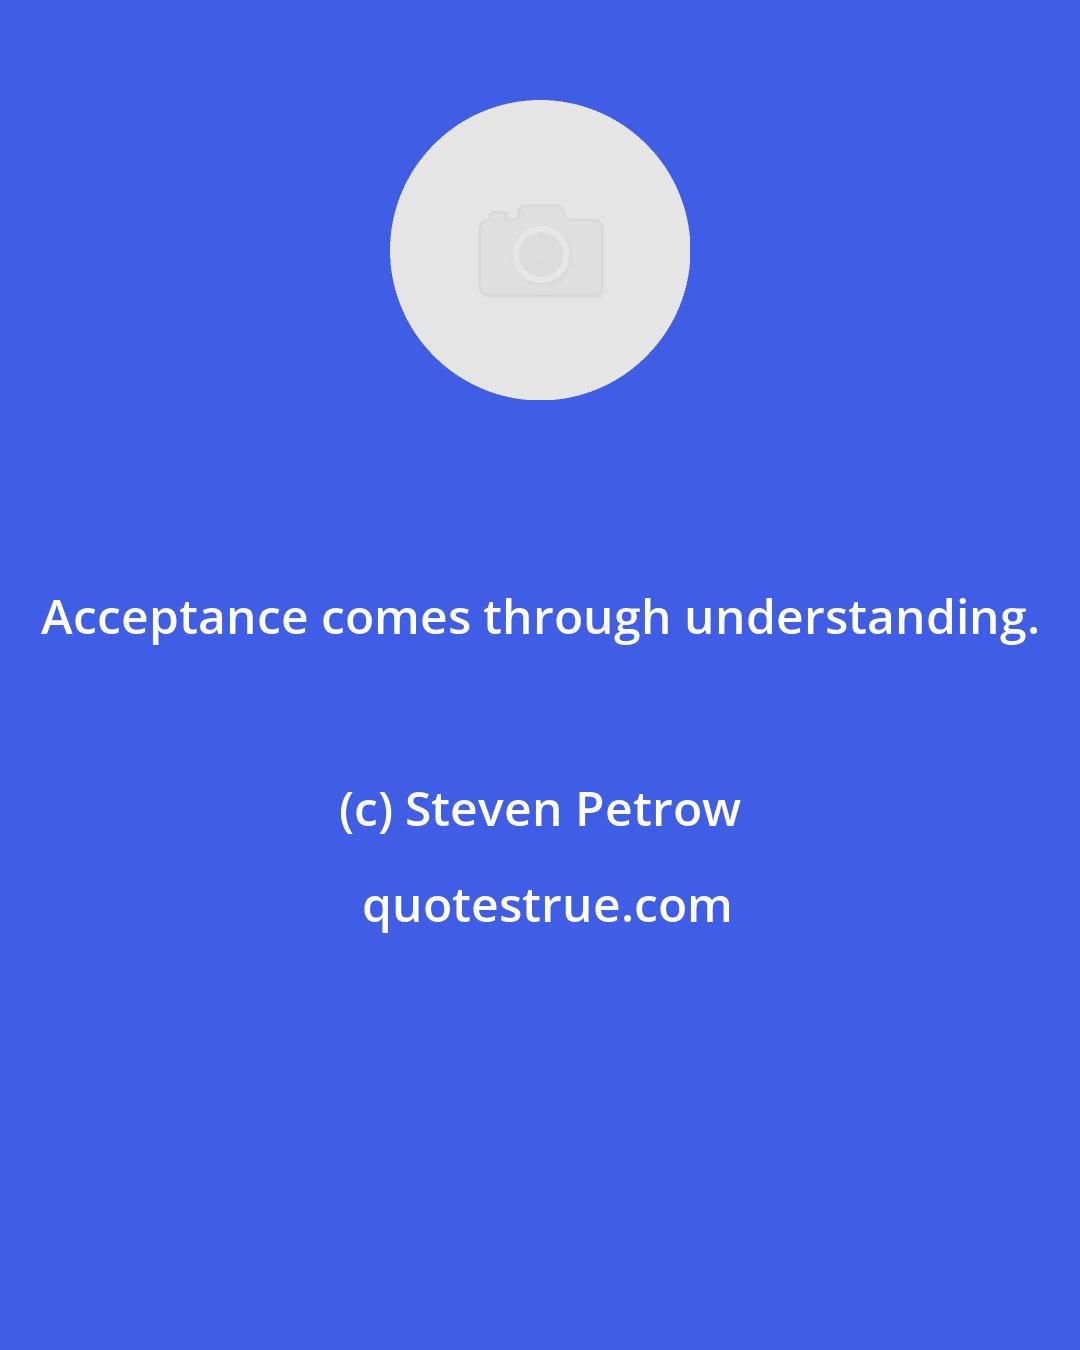 Steven Petrow: Acceptance comes through understanding.